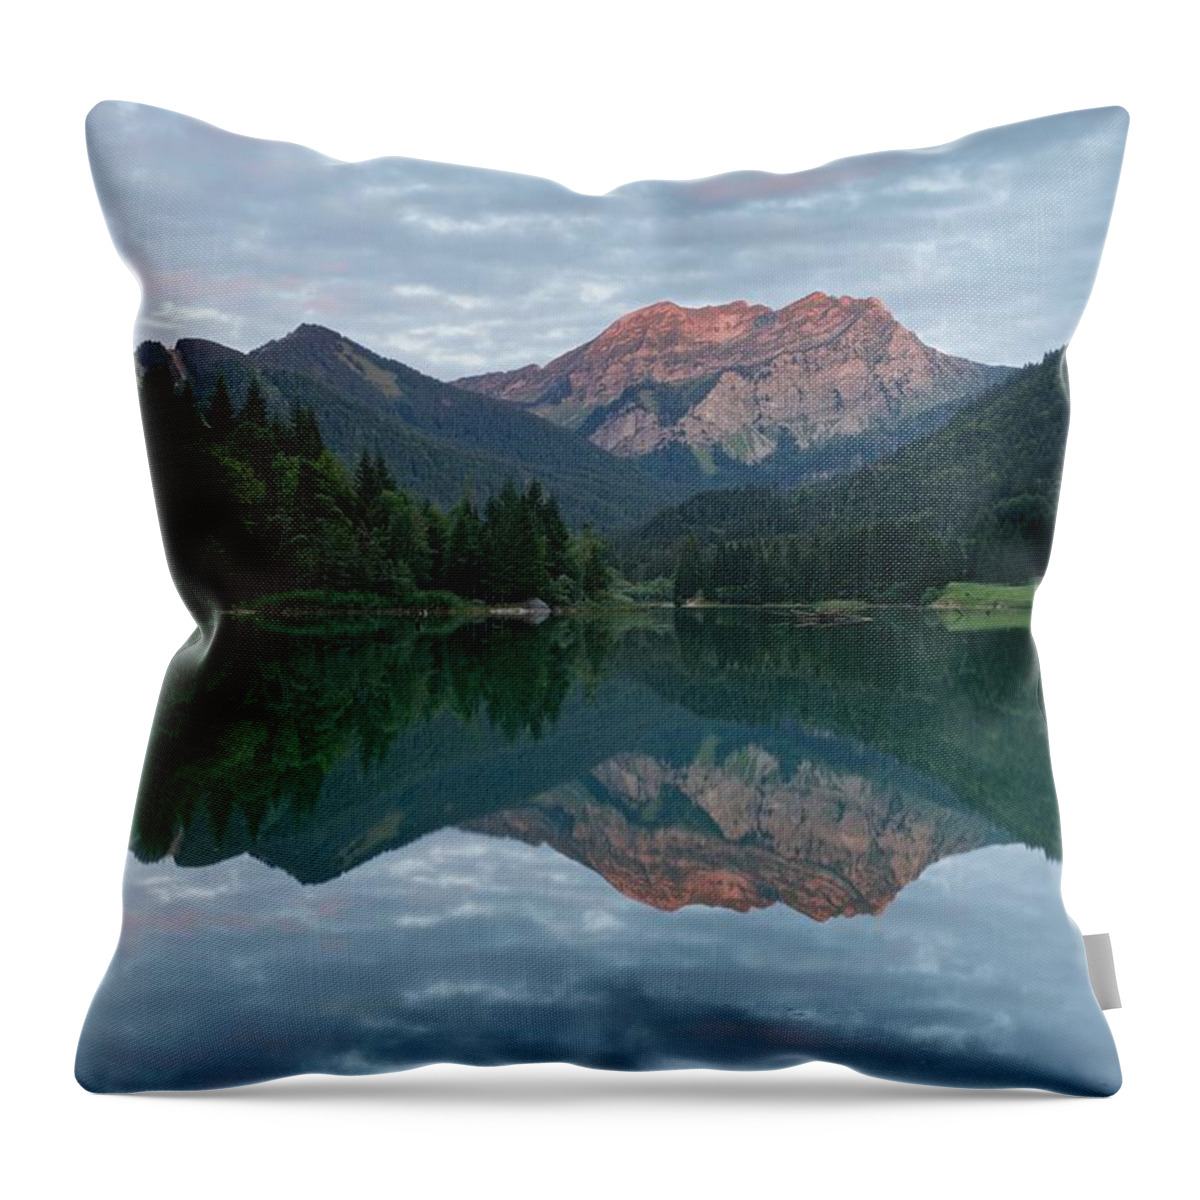 Lac De Vallon Throw Pillow featuring the photograph Sunset at Lac De Vallon by Stephen Taylor